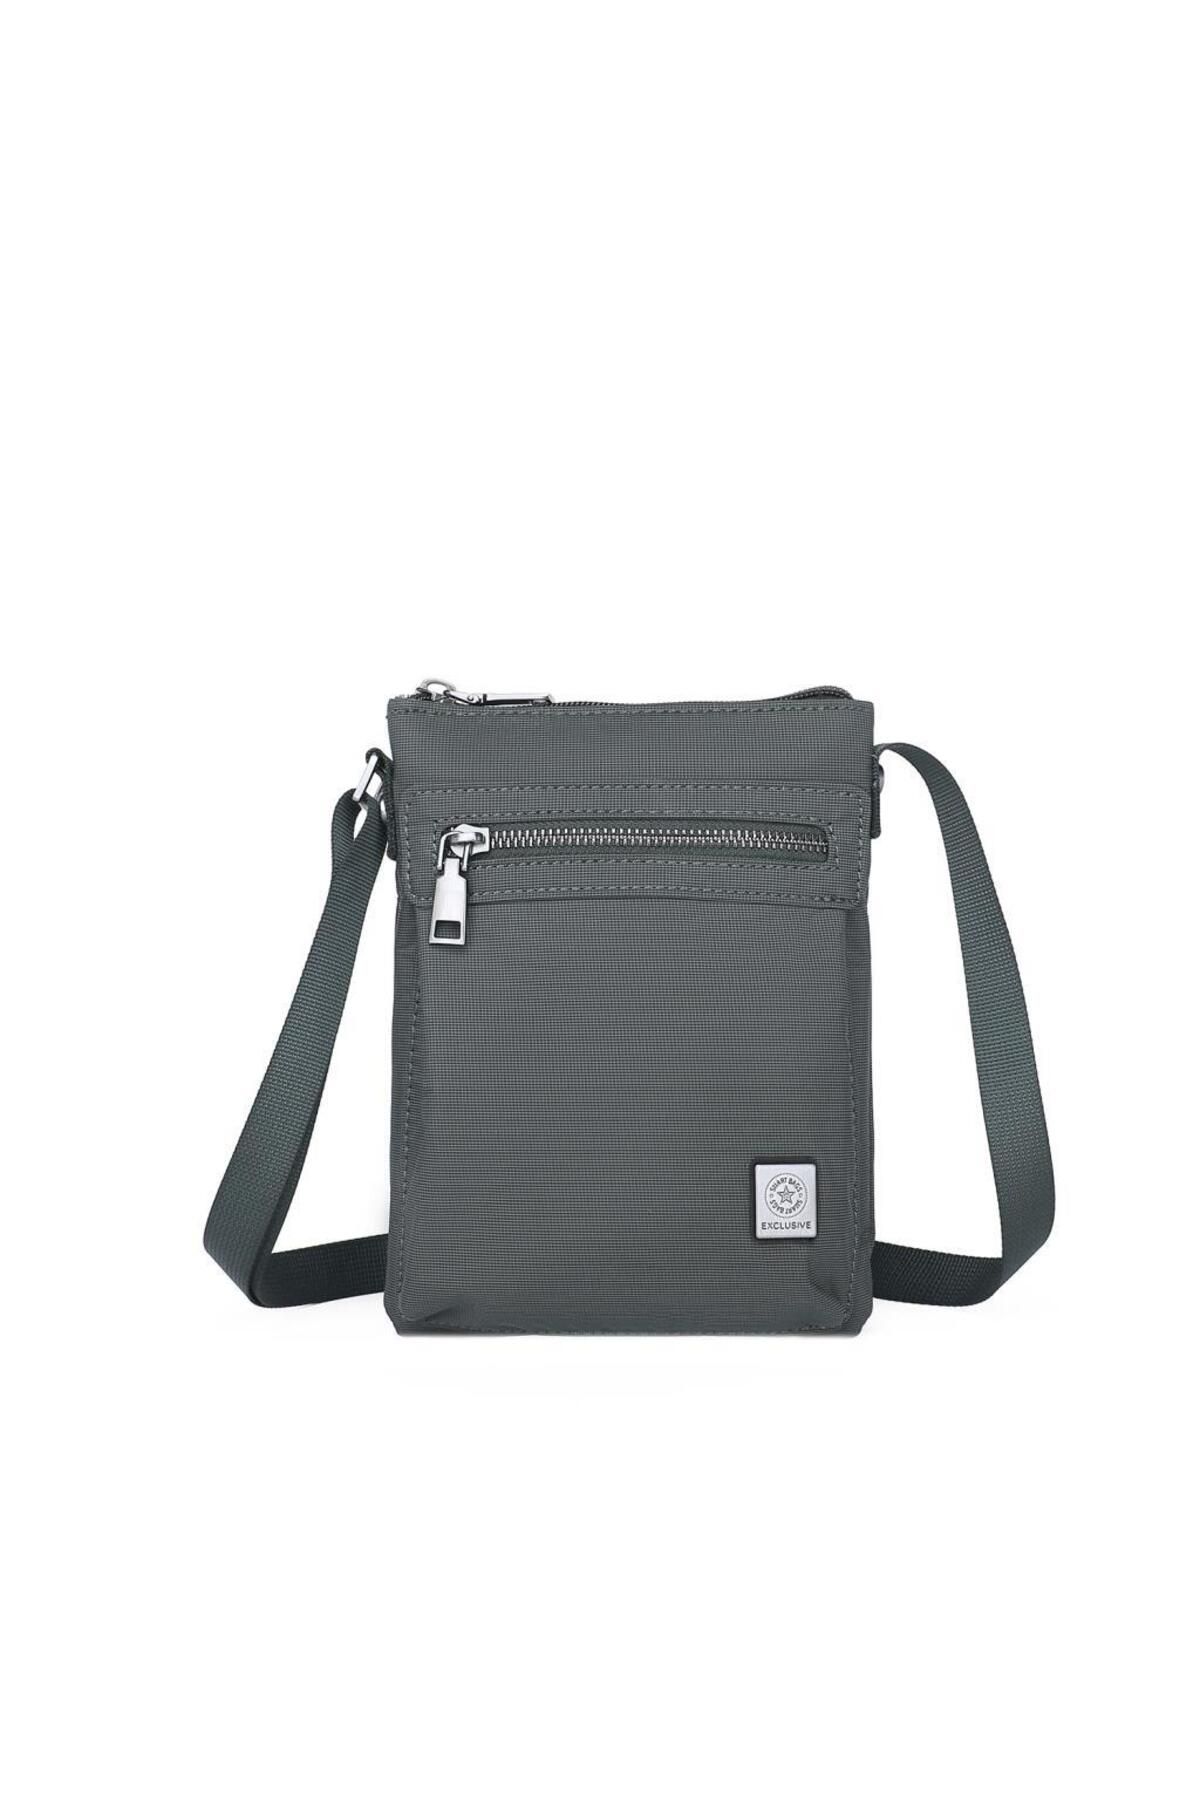 Smart Bags Exclusive Serisi Uniseks Postacı Çantası Smart Bags 8732